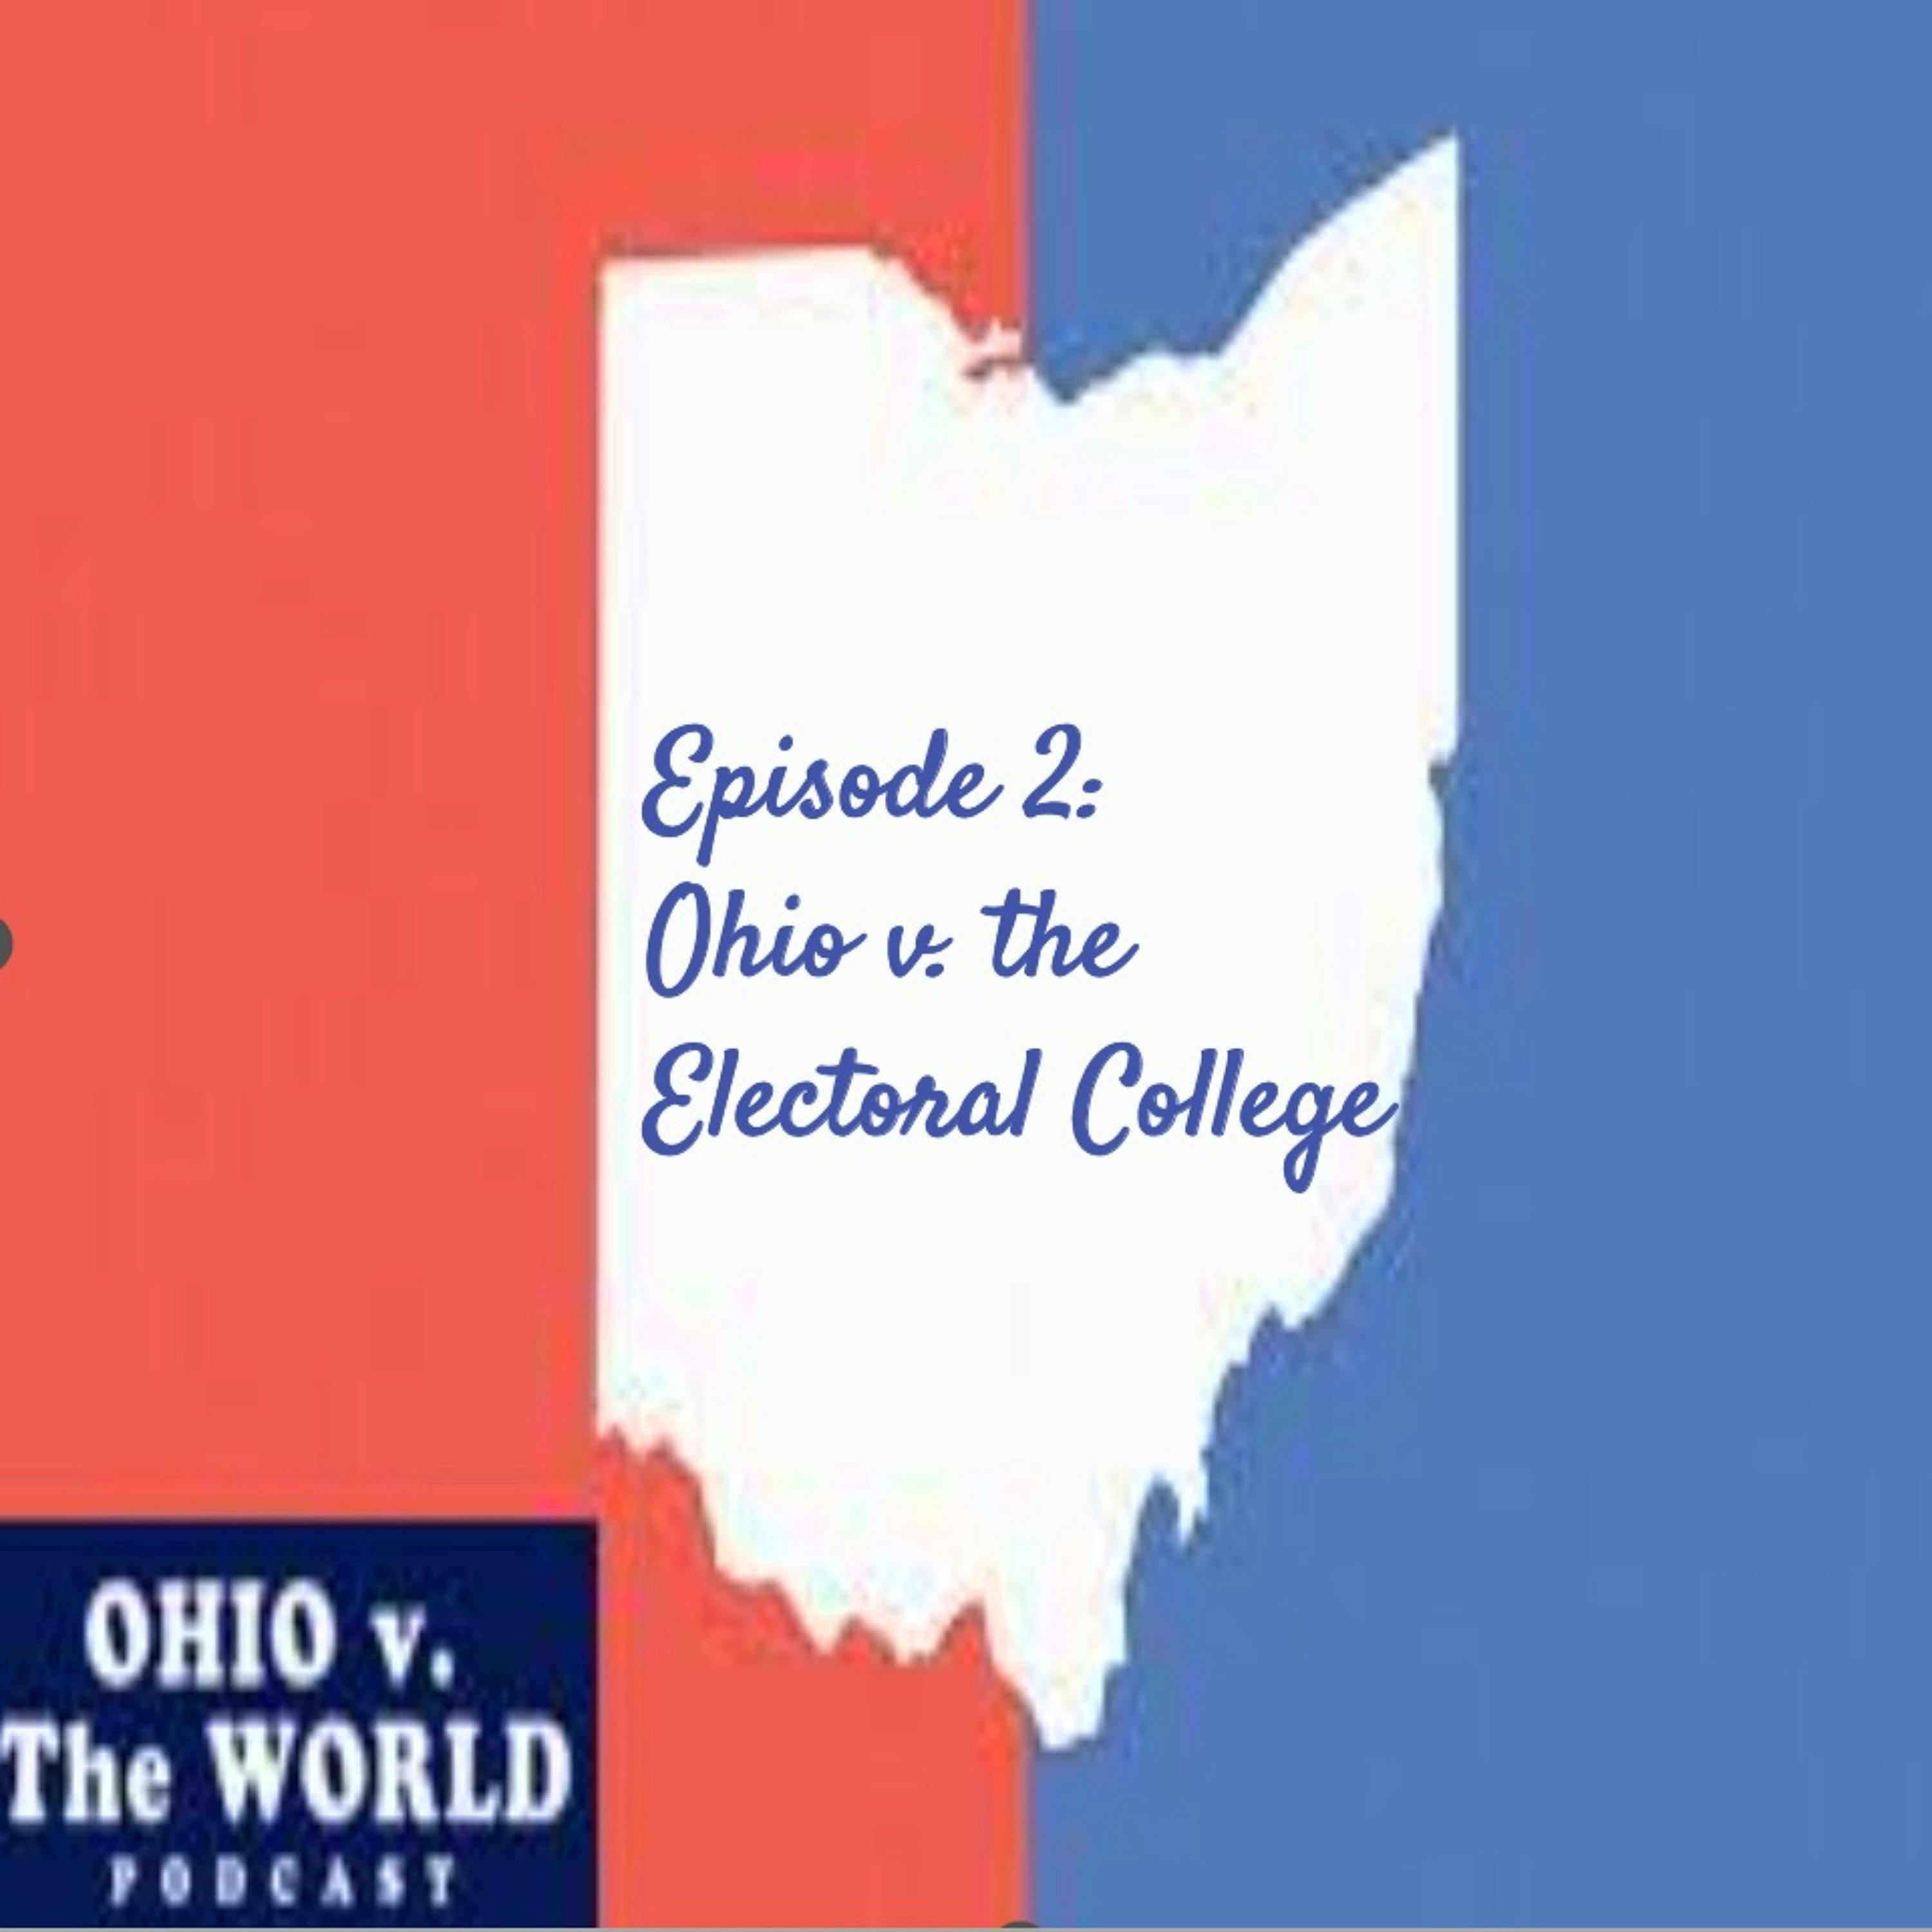 Episode 2: Ohio v. the Electoral College (Why Ohio picks the president)